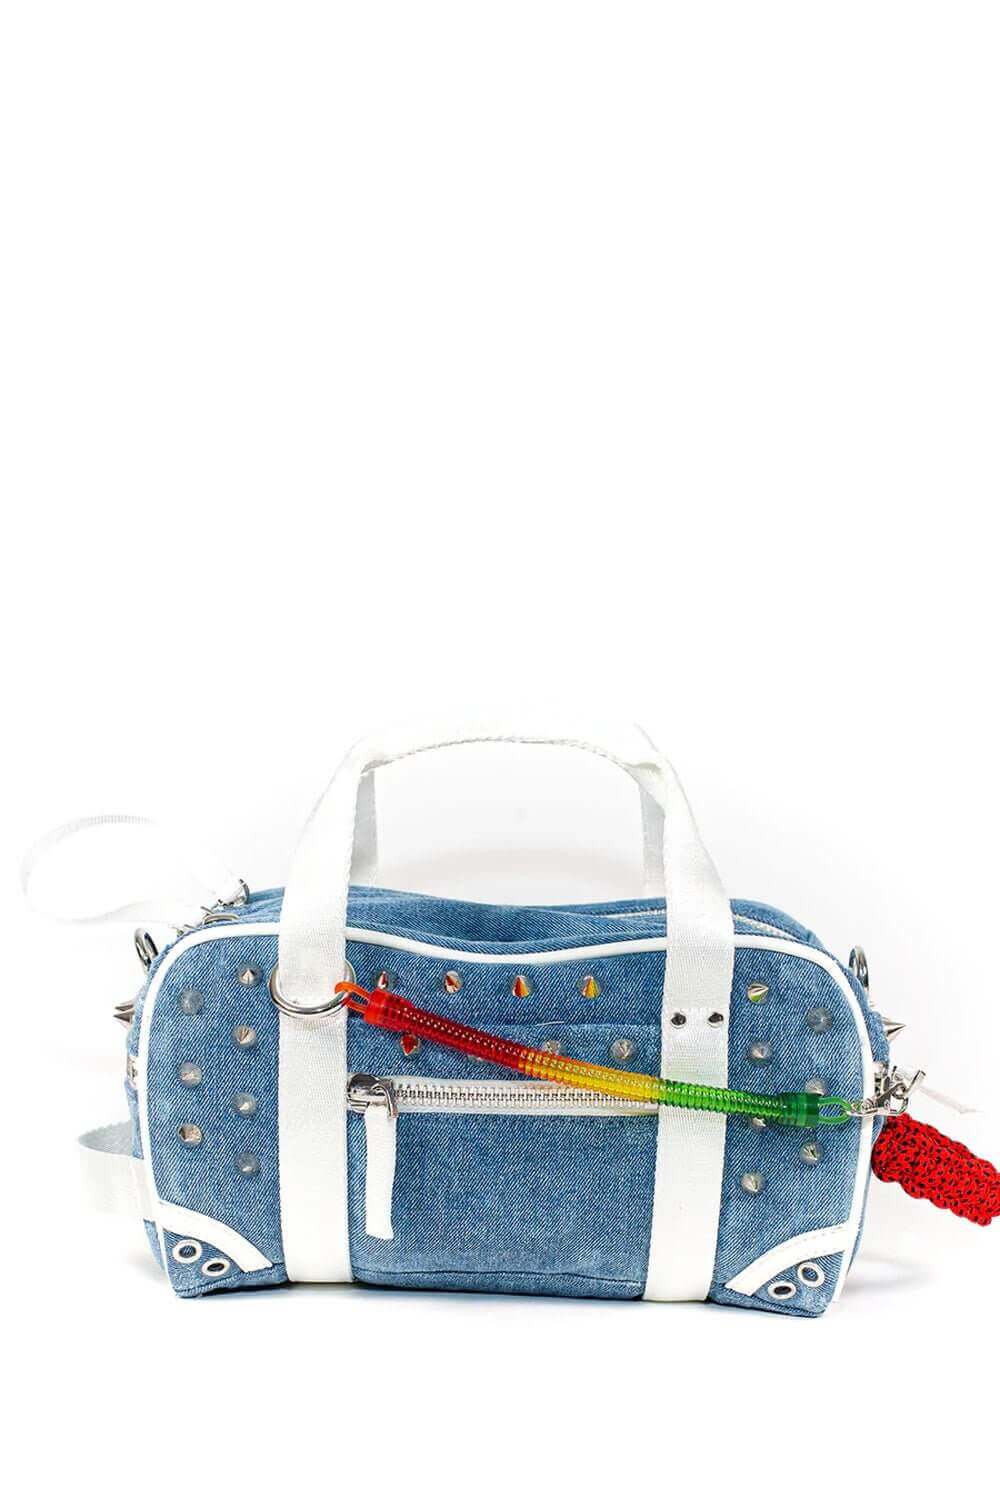 HOCKEY DENIM BAG Denim hockey mini bag. Zip closure. Shoulder strap. Made in Italy. 100% Cotton. HTC LOS ANGELES